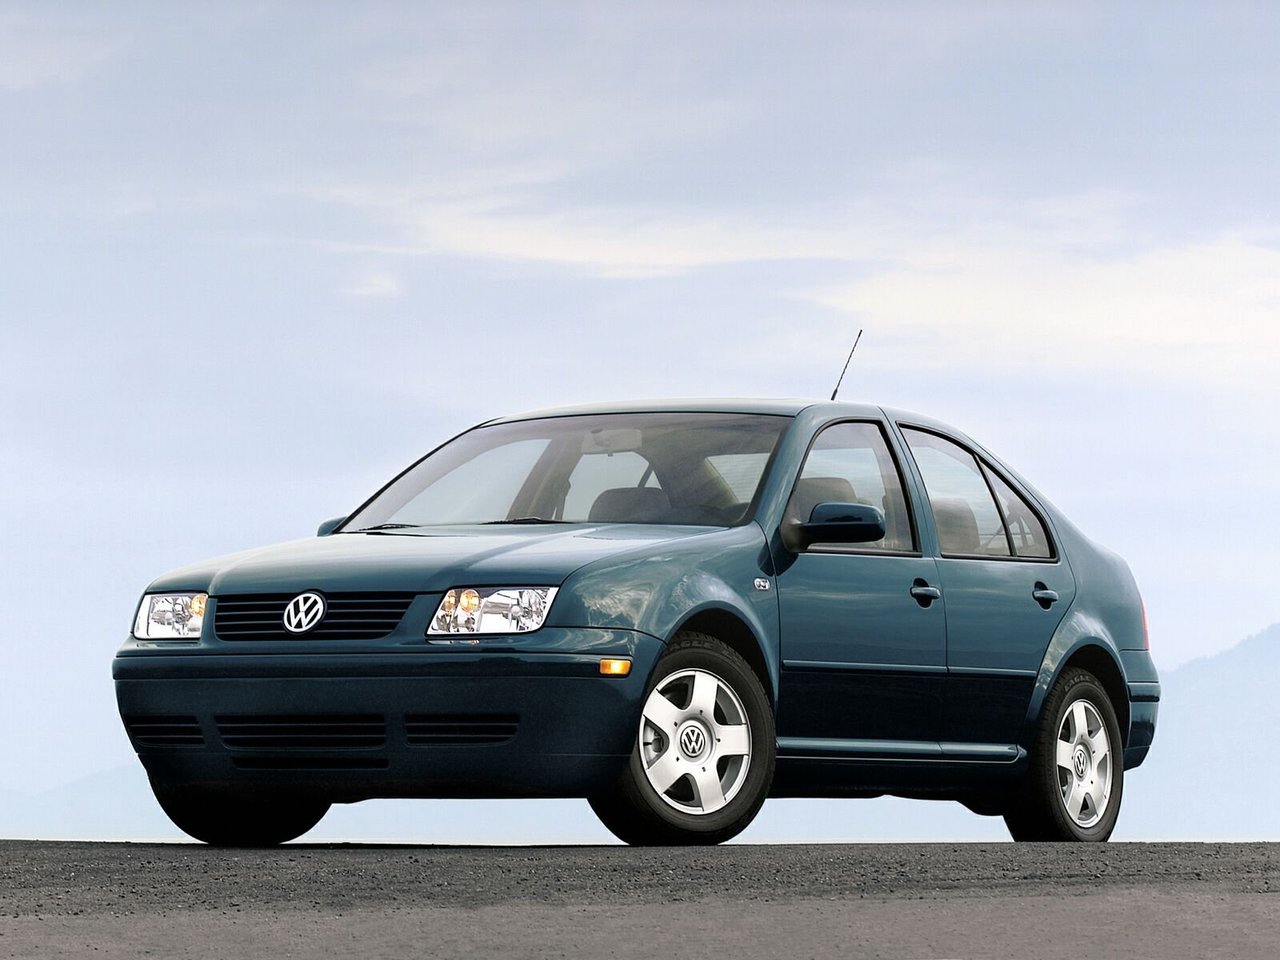 Снижаем расход Volkswagen Jetta на топливо, устанавливаем ГБО